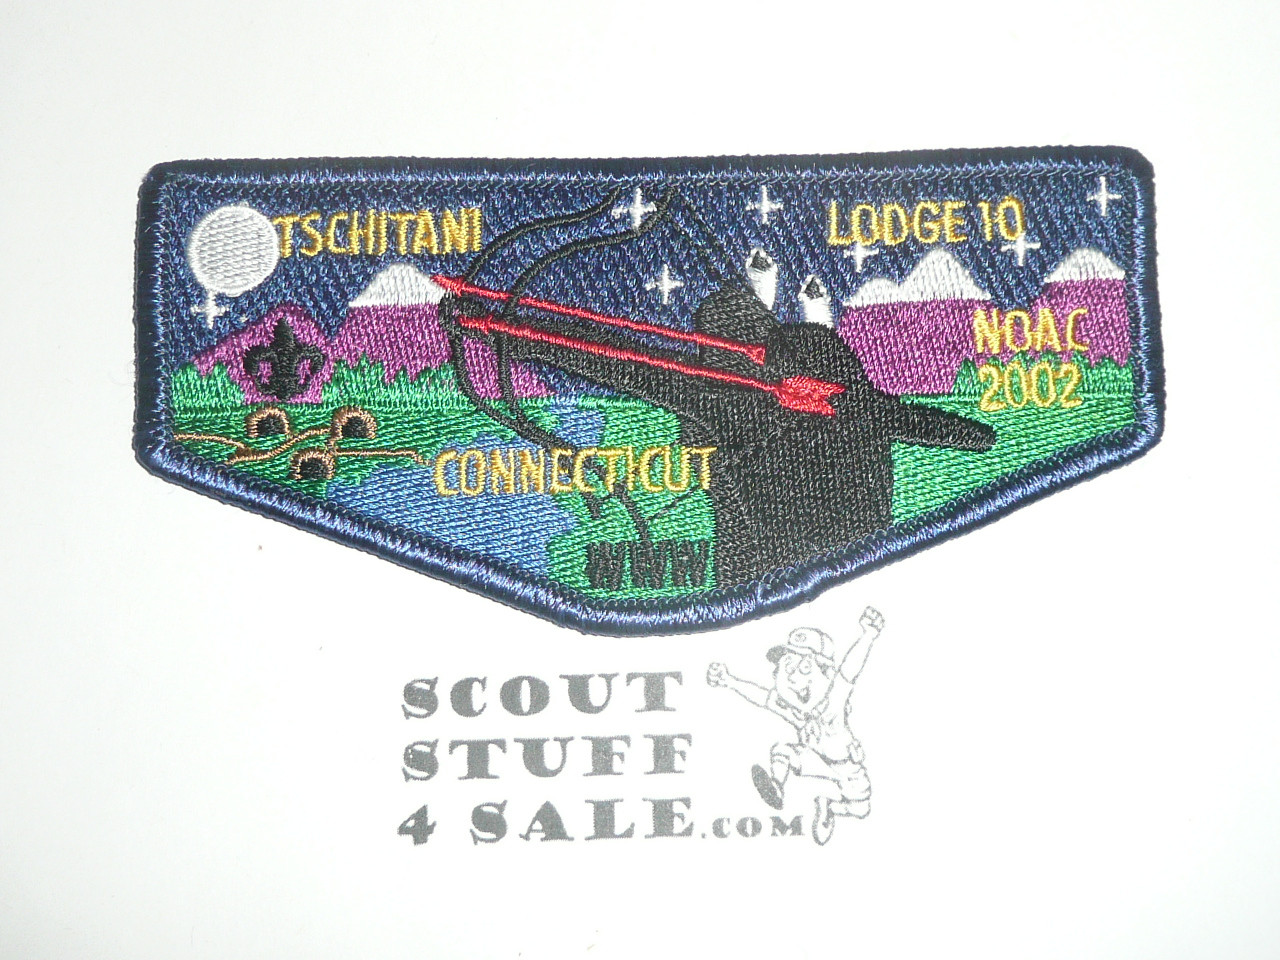 Order of the Arrow Lodge #10 Tschitani s21 2002 NOAC Flap Patch - Boy Scout